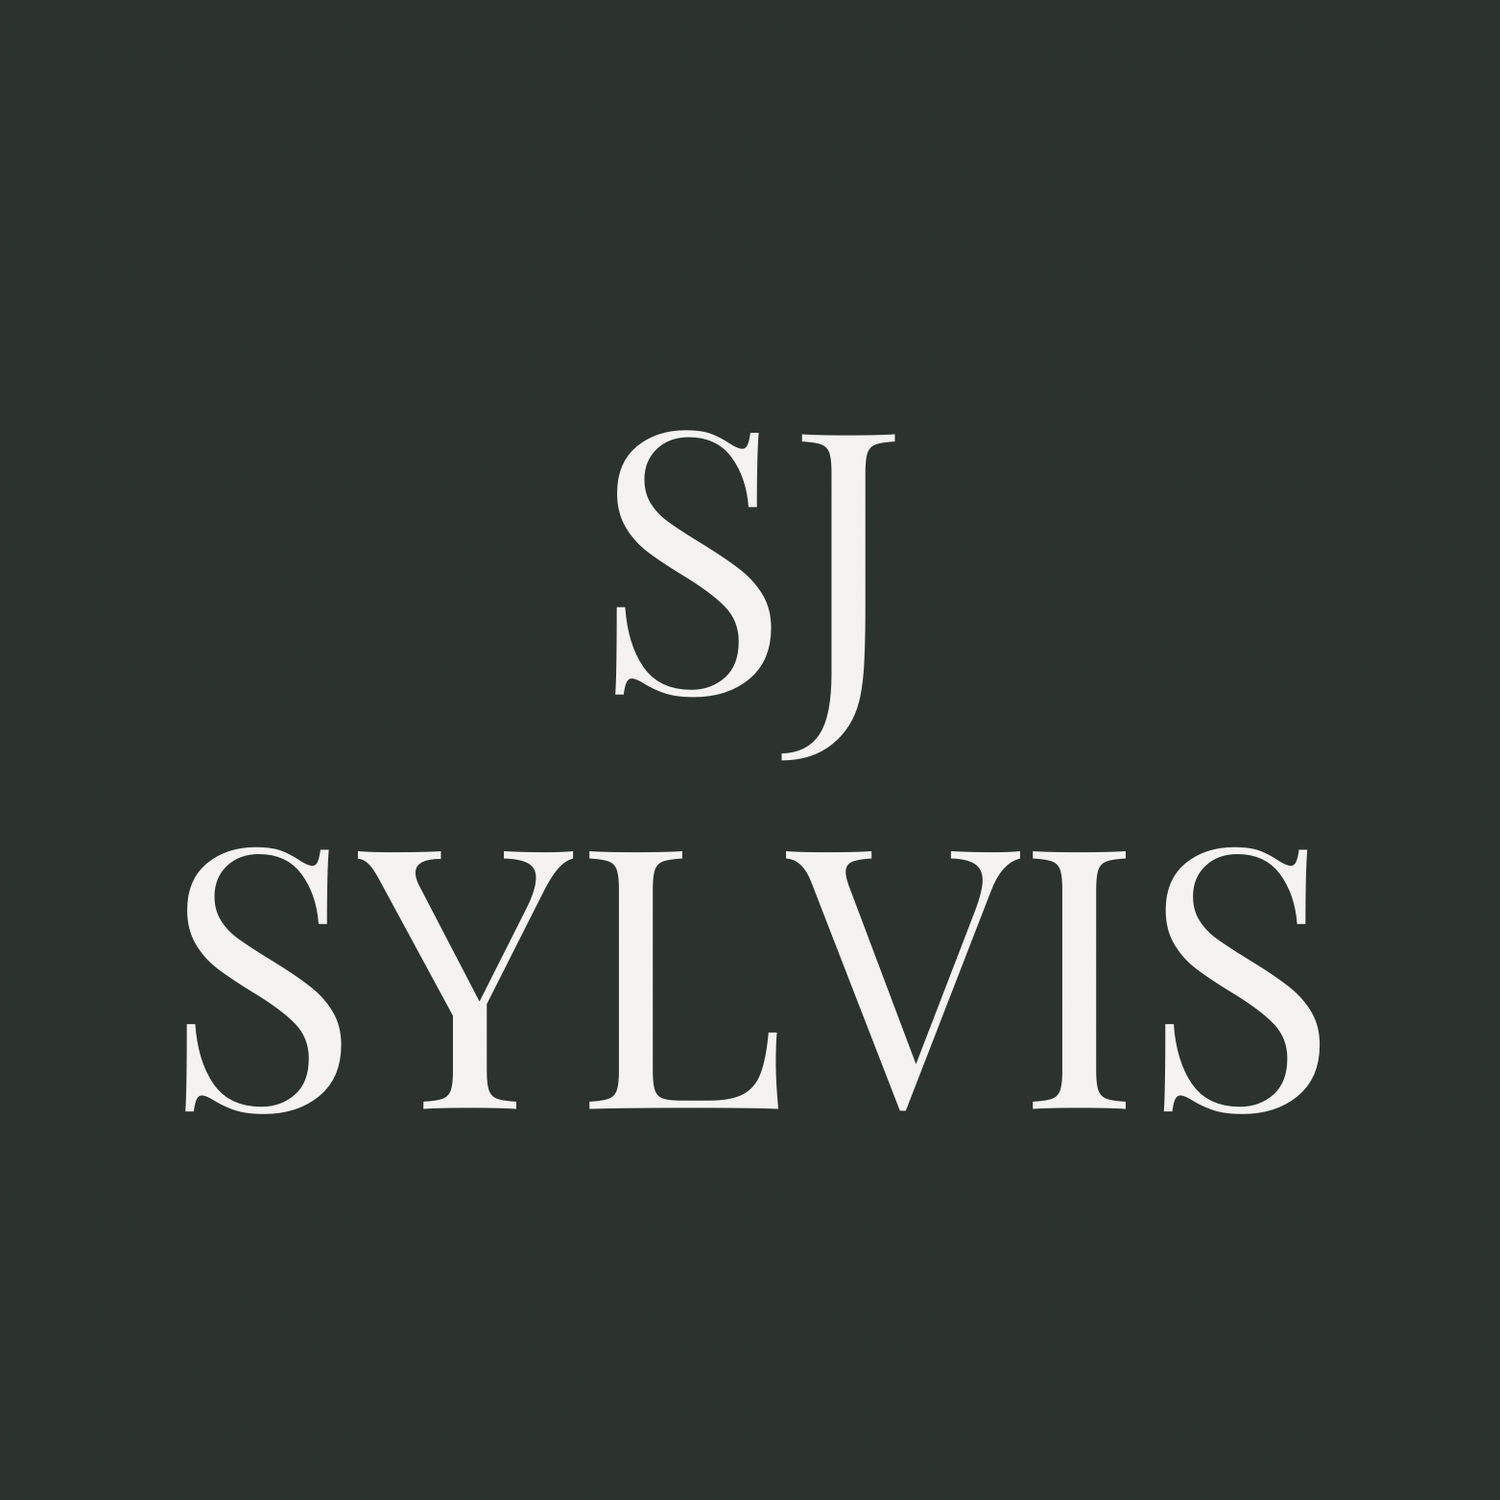 SJ Sylvis